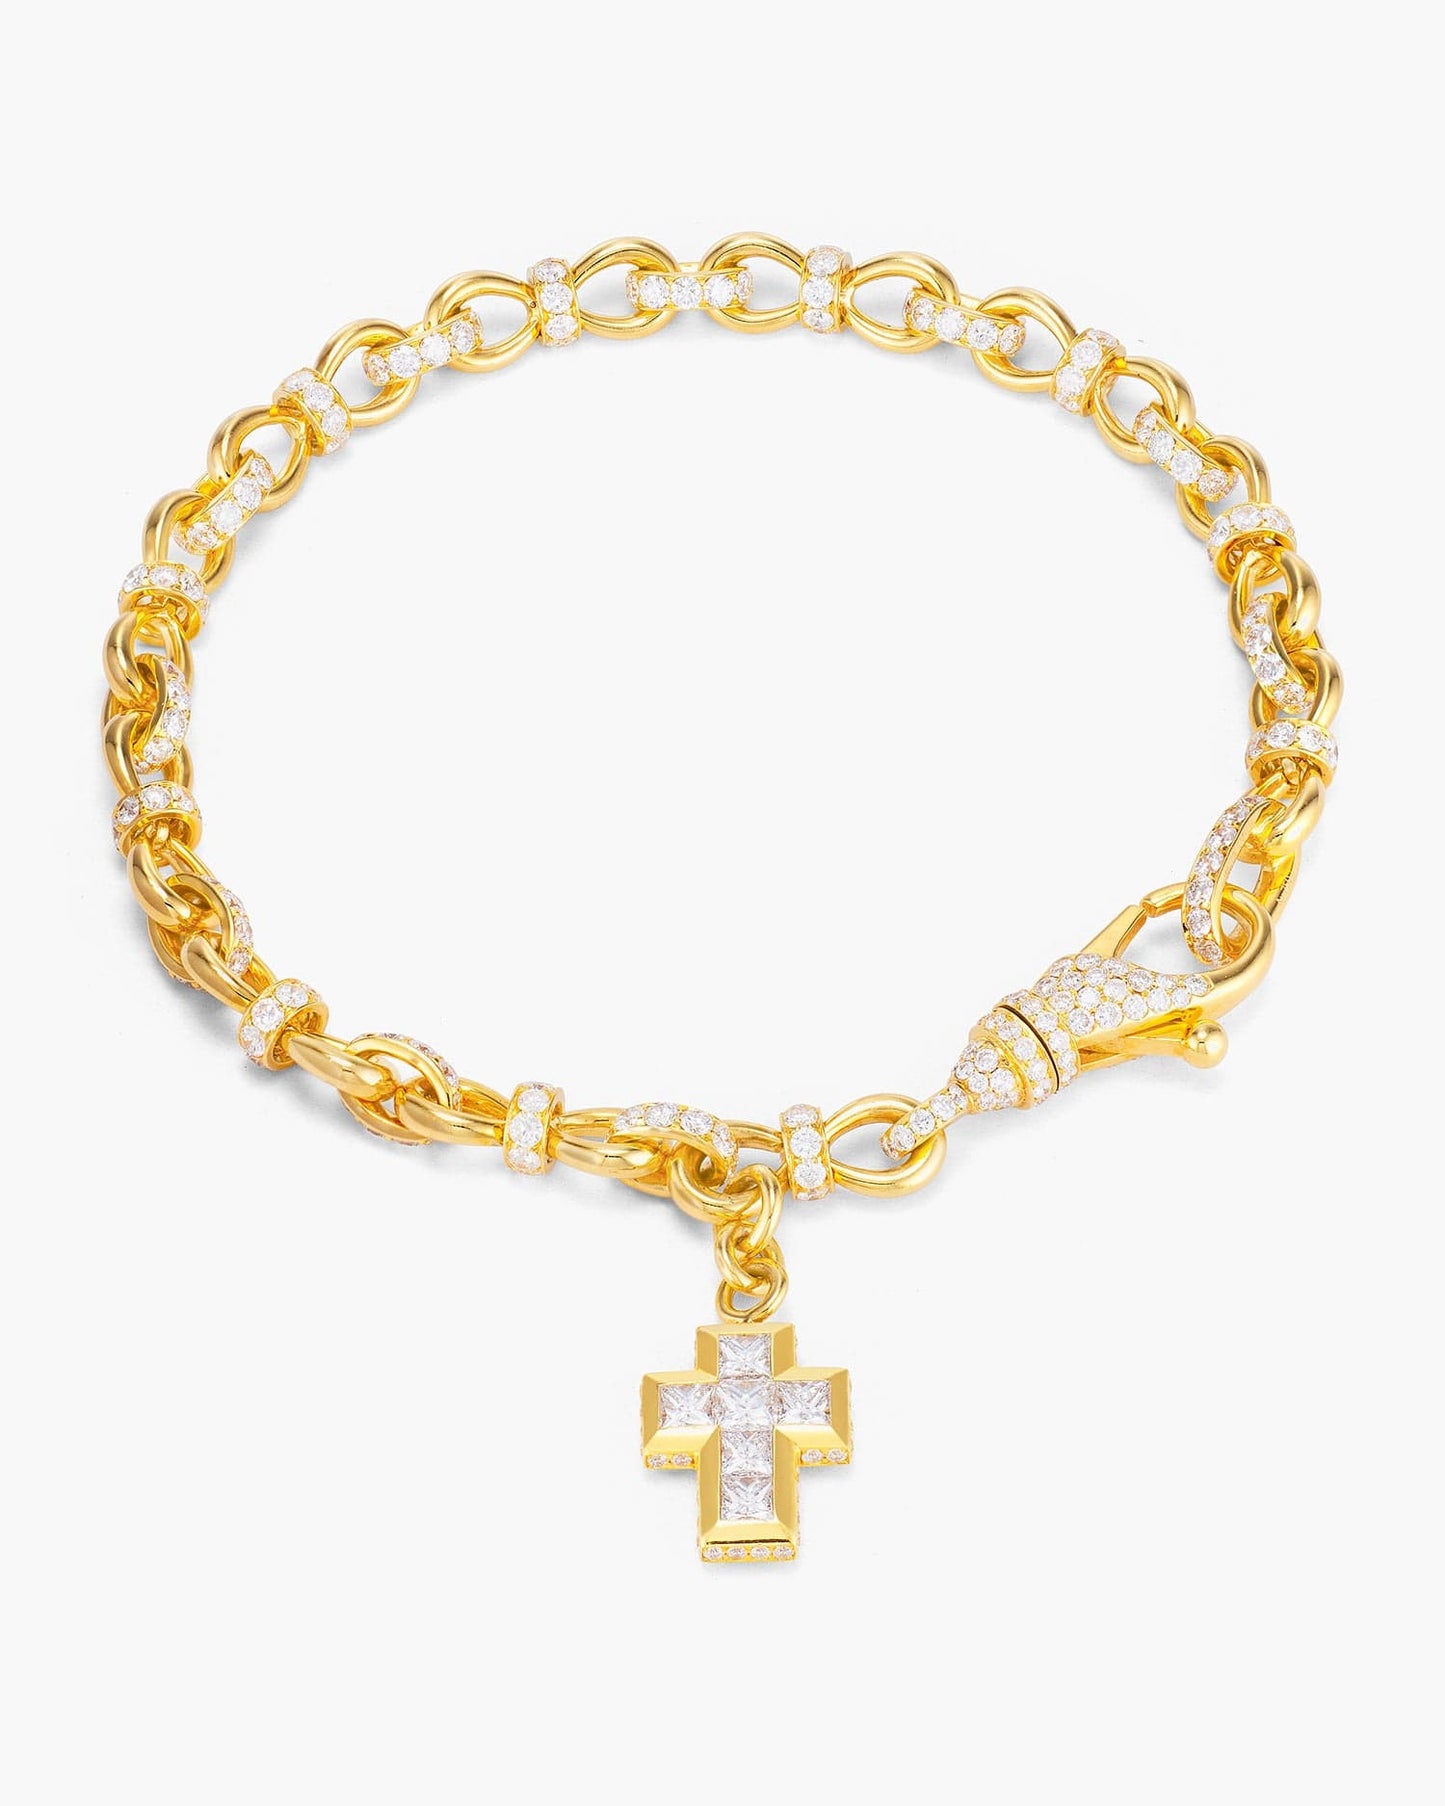 Yellow Gold Diamond Rope Bracelet with Cross Charm